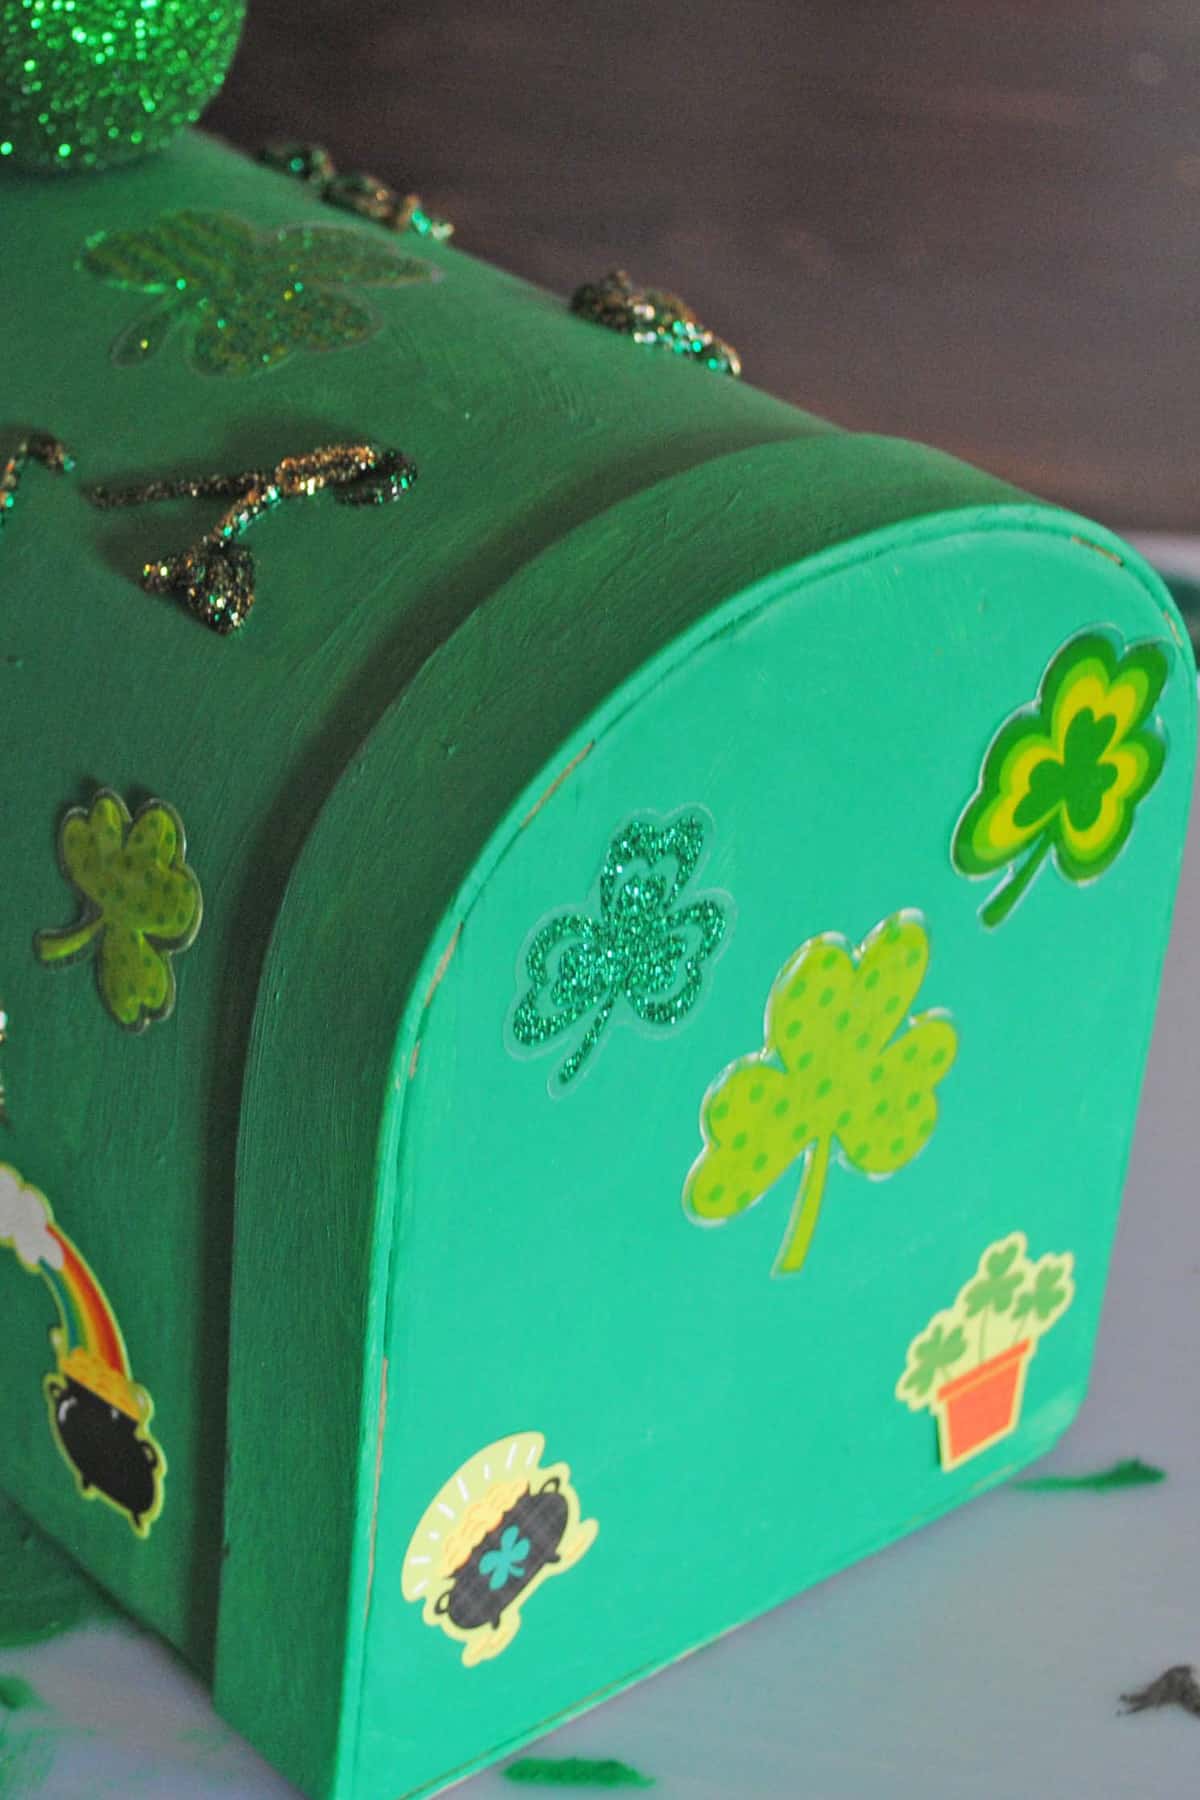 St. Patty's Day stickers on green leprechaun mailbox